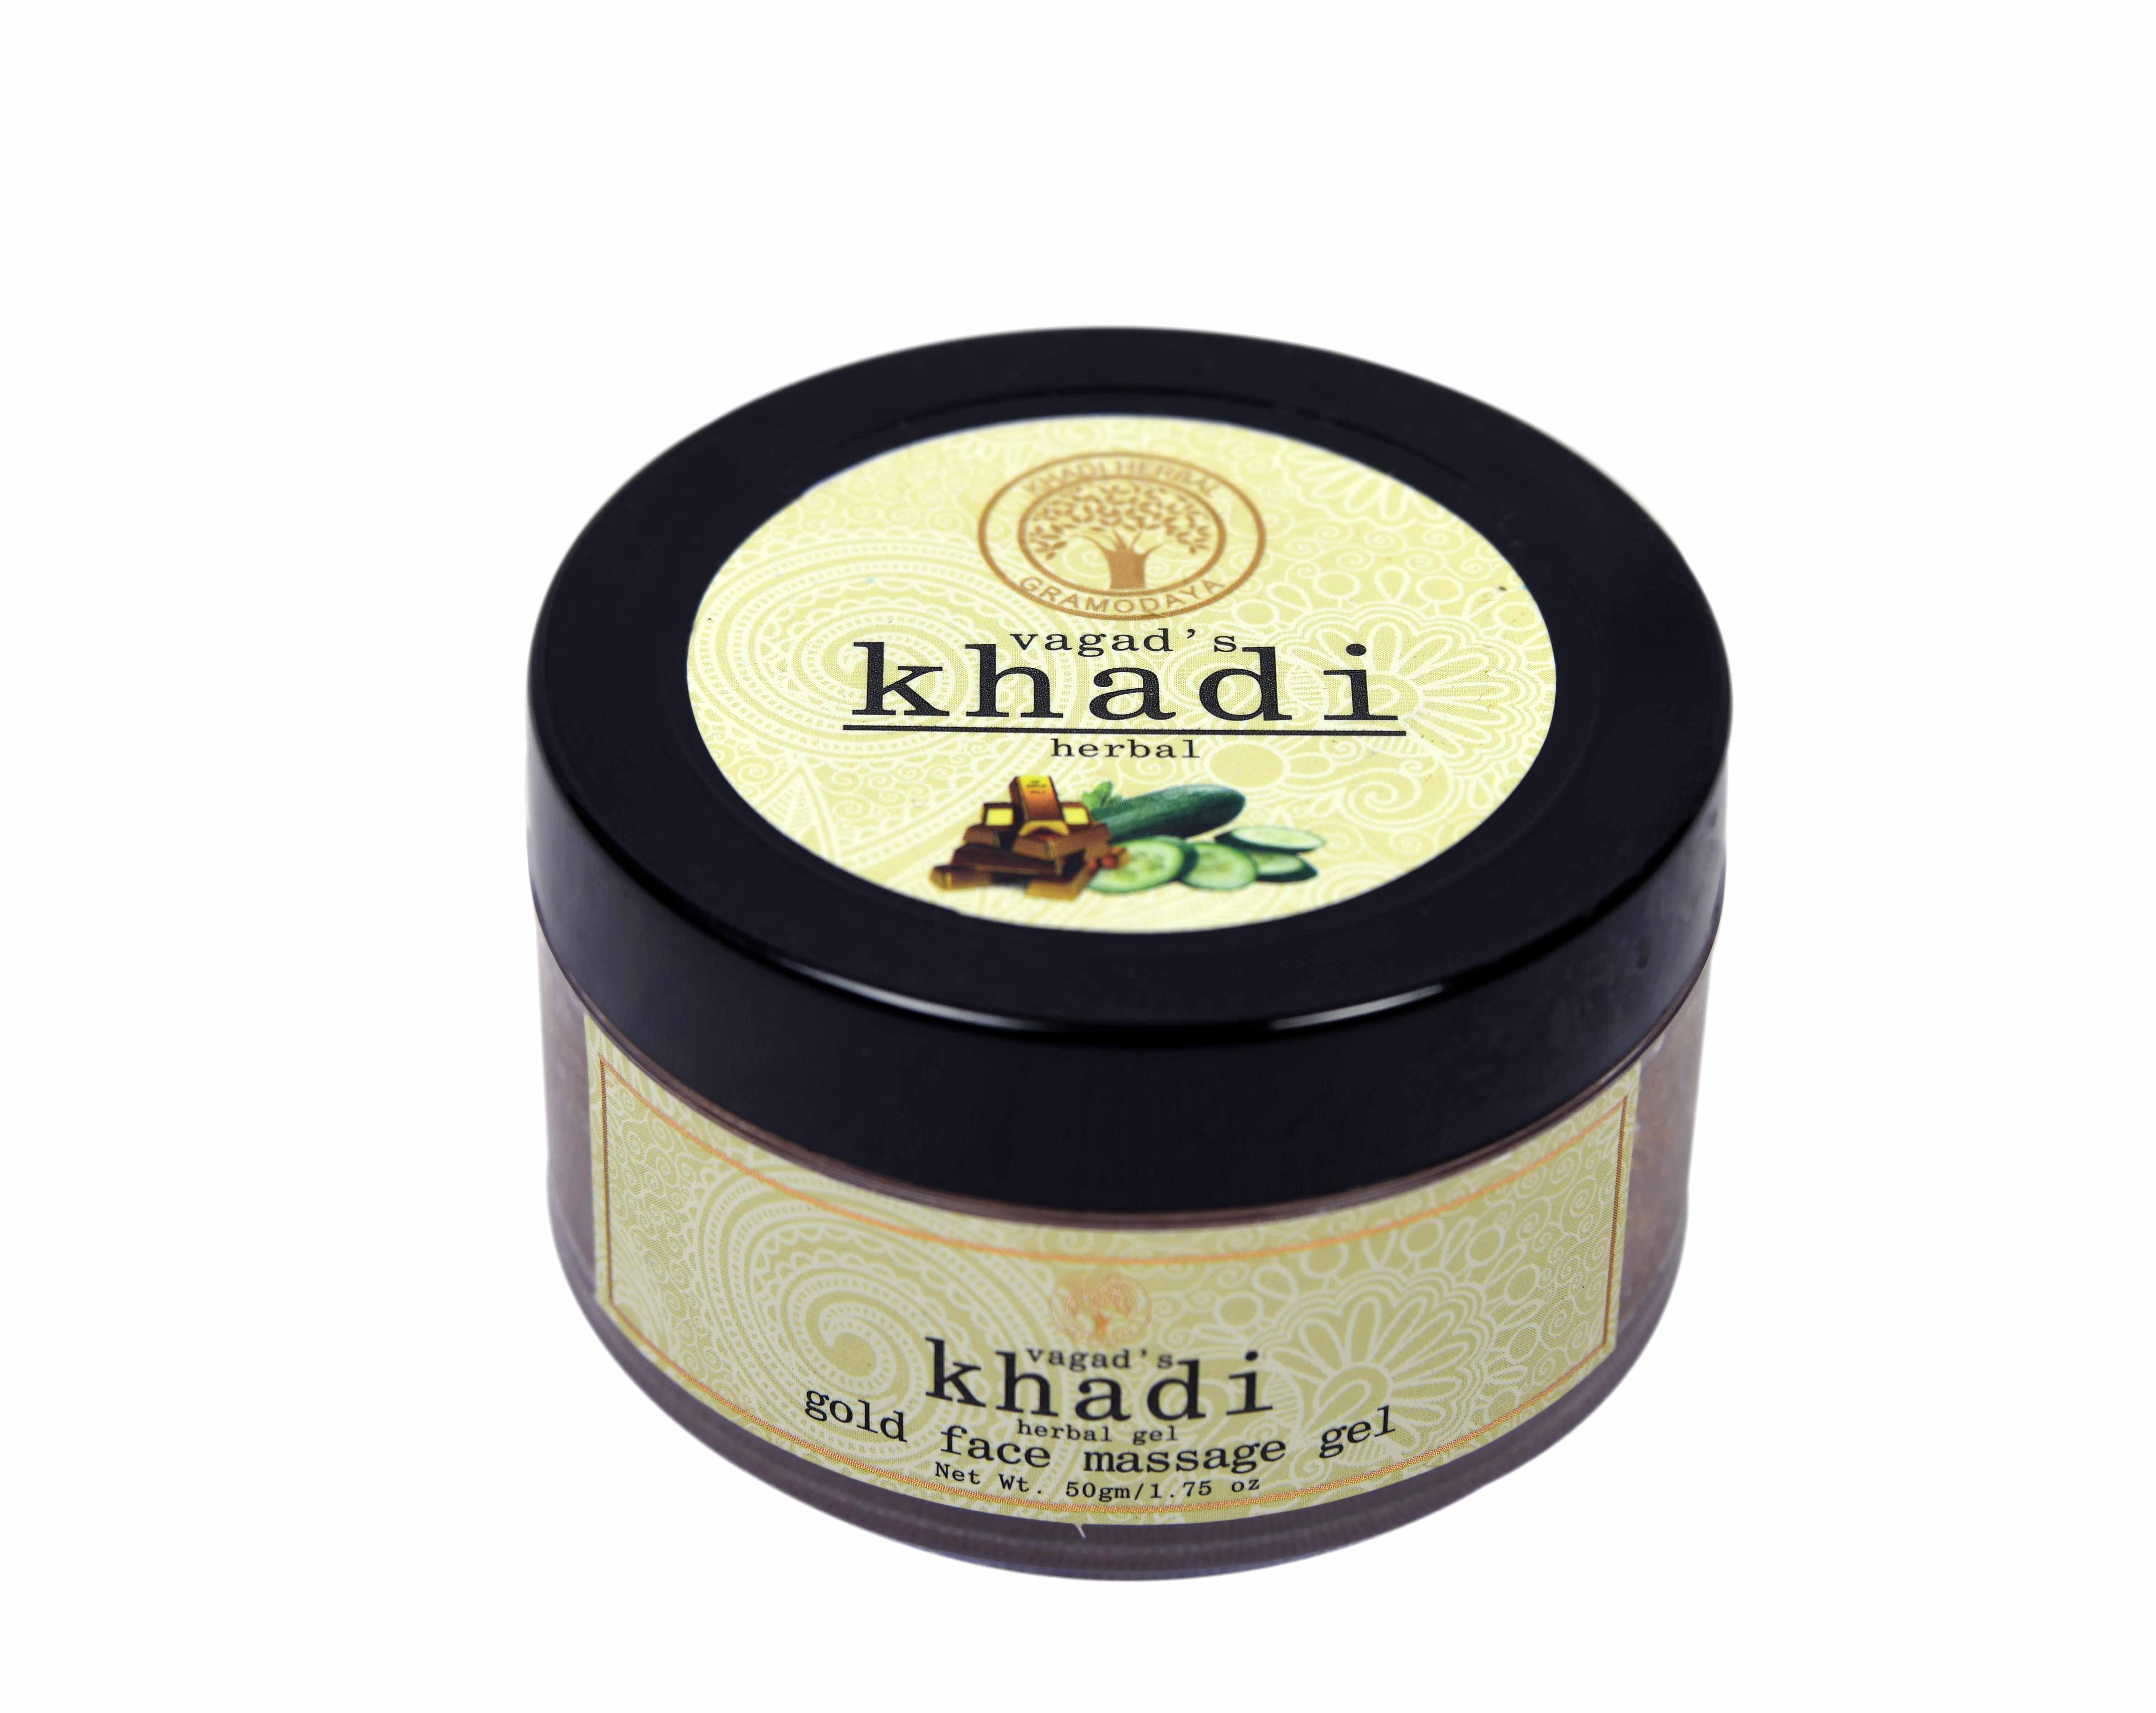 Buy Vagad's Khadi Gold Face Massage Gel at Best Price Online